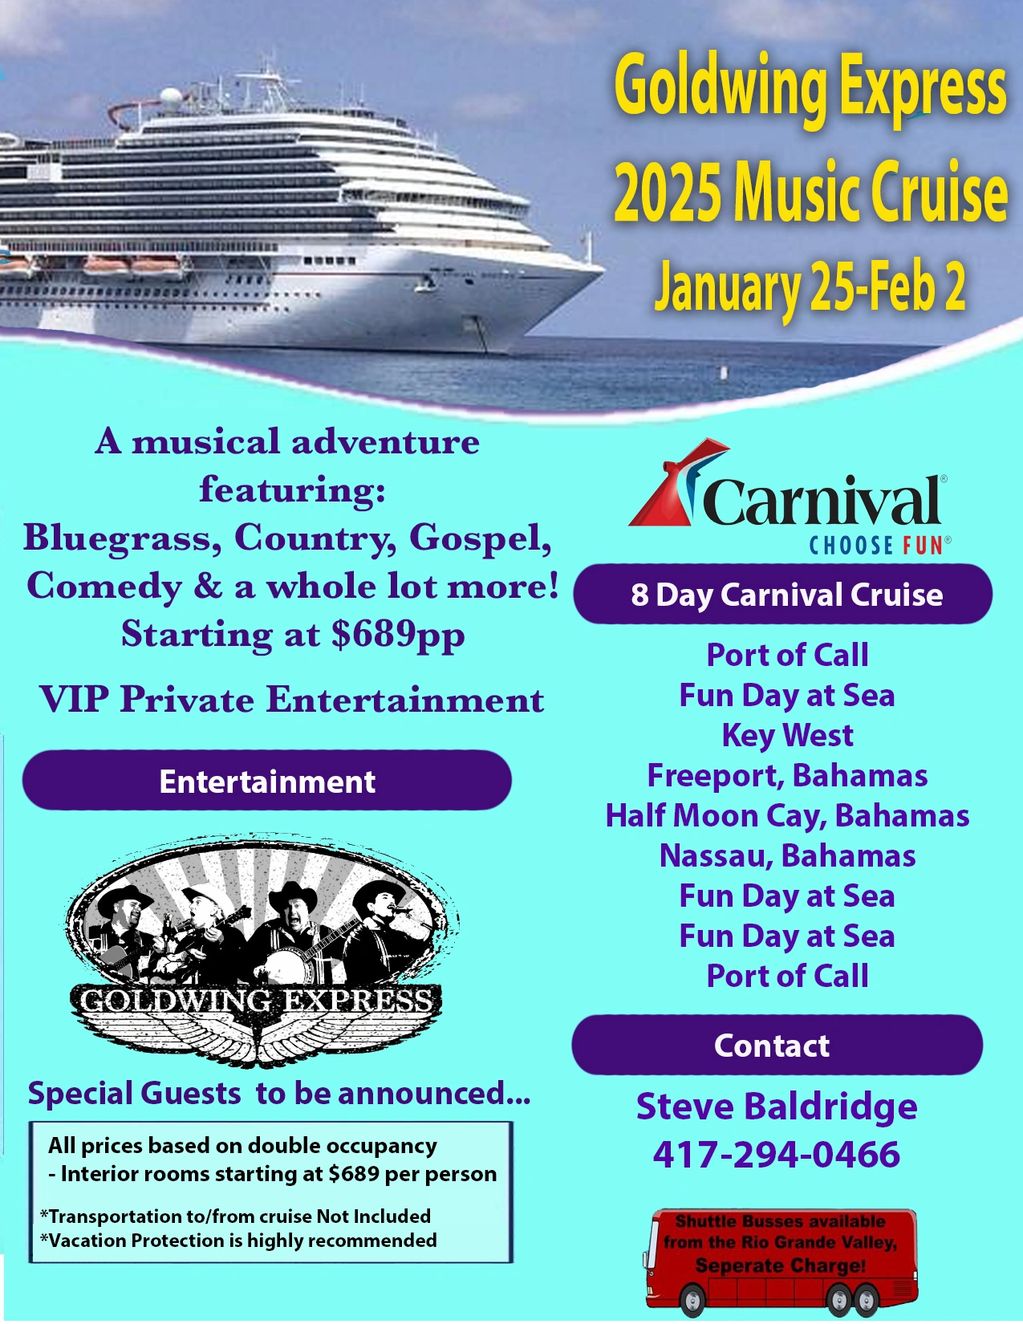 Goldwing Express 2025 Music Cruise